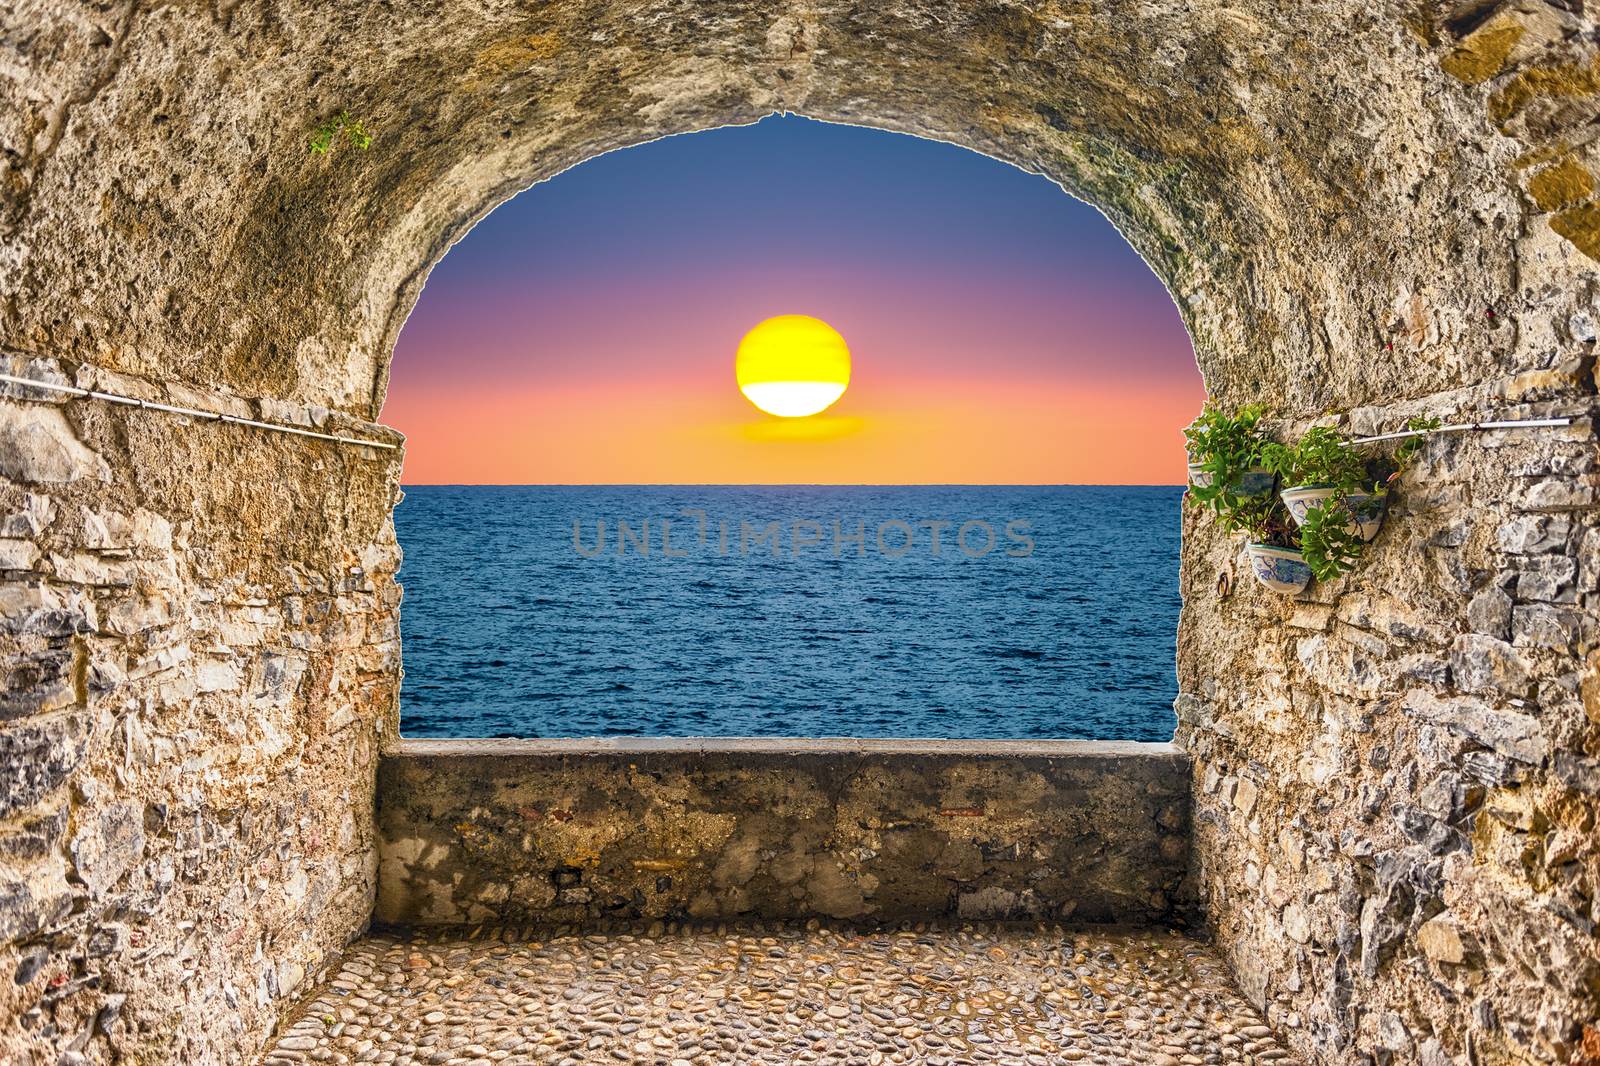 Rock balcony overlooking sunset by the mediterranean sea, Italy by marcorubino